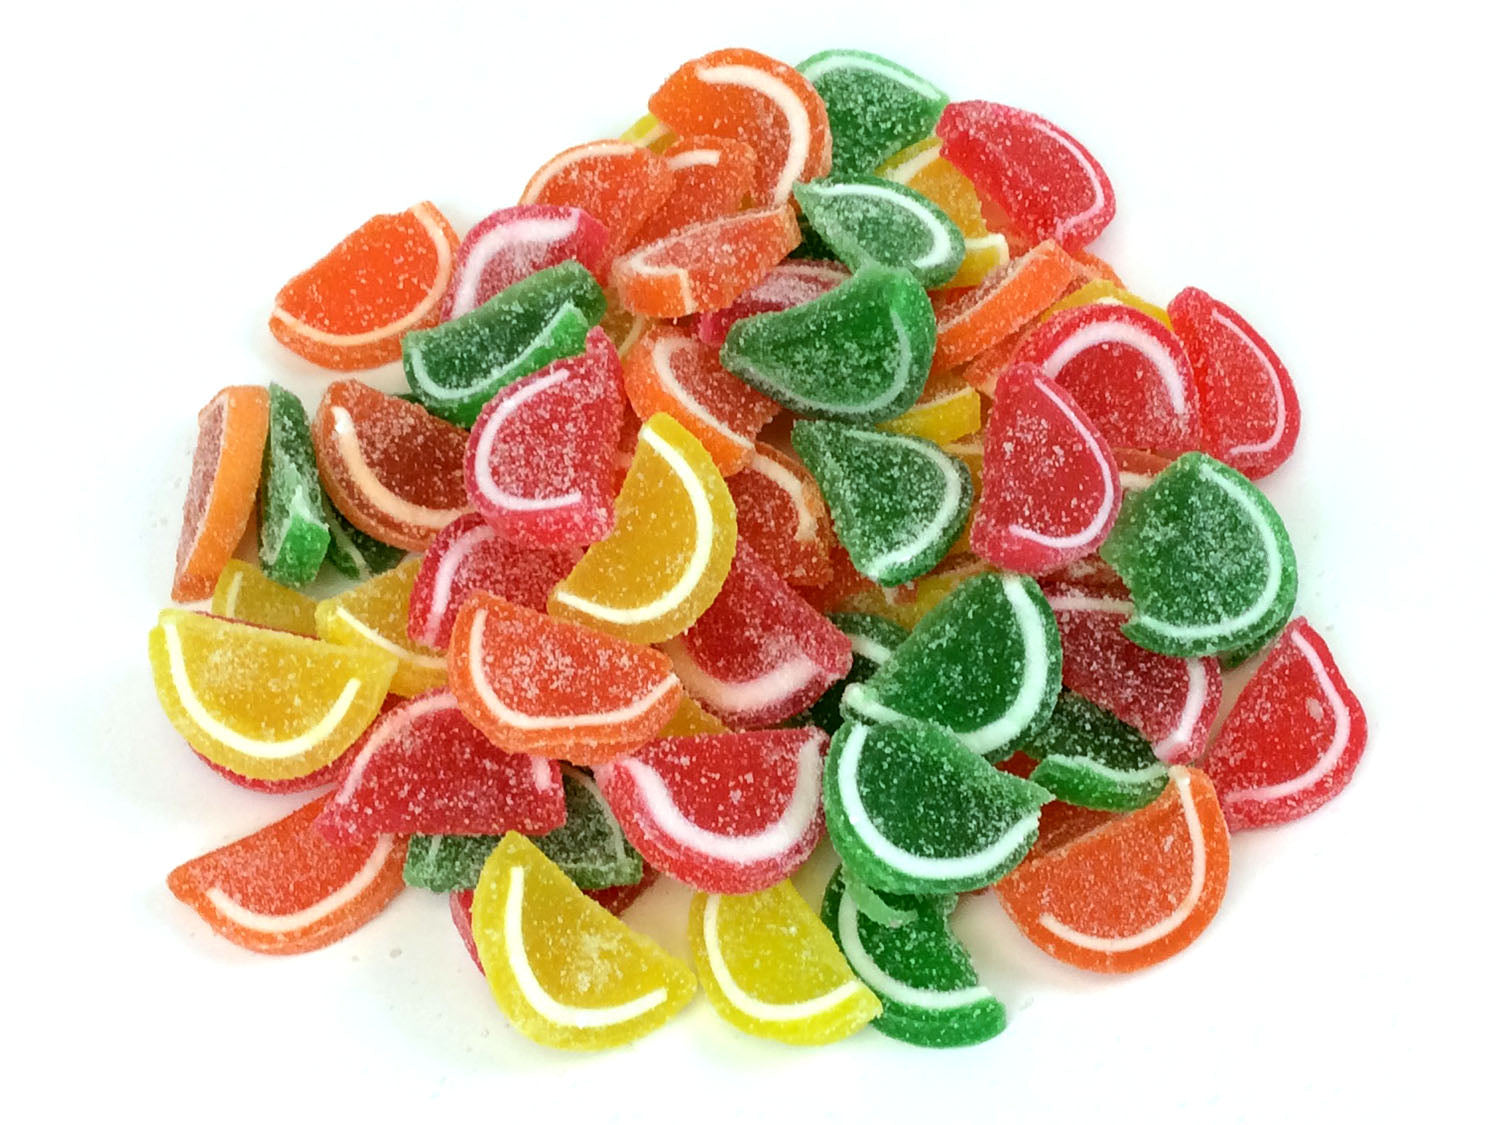 Fruit Slices